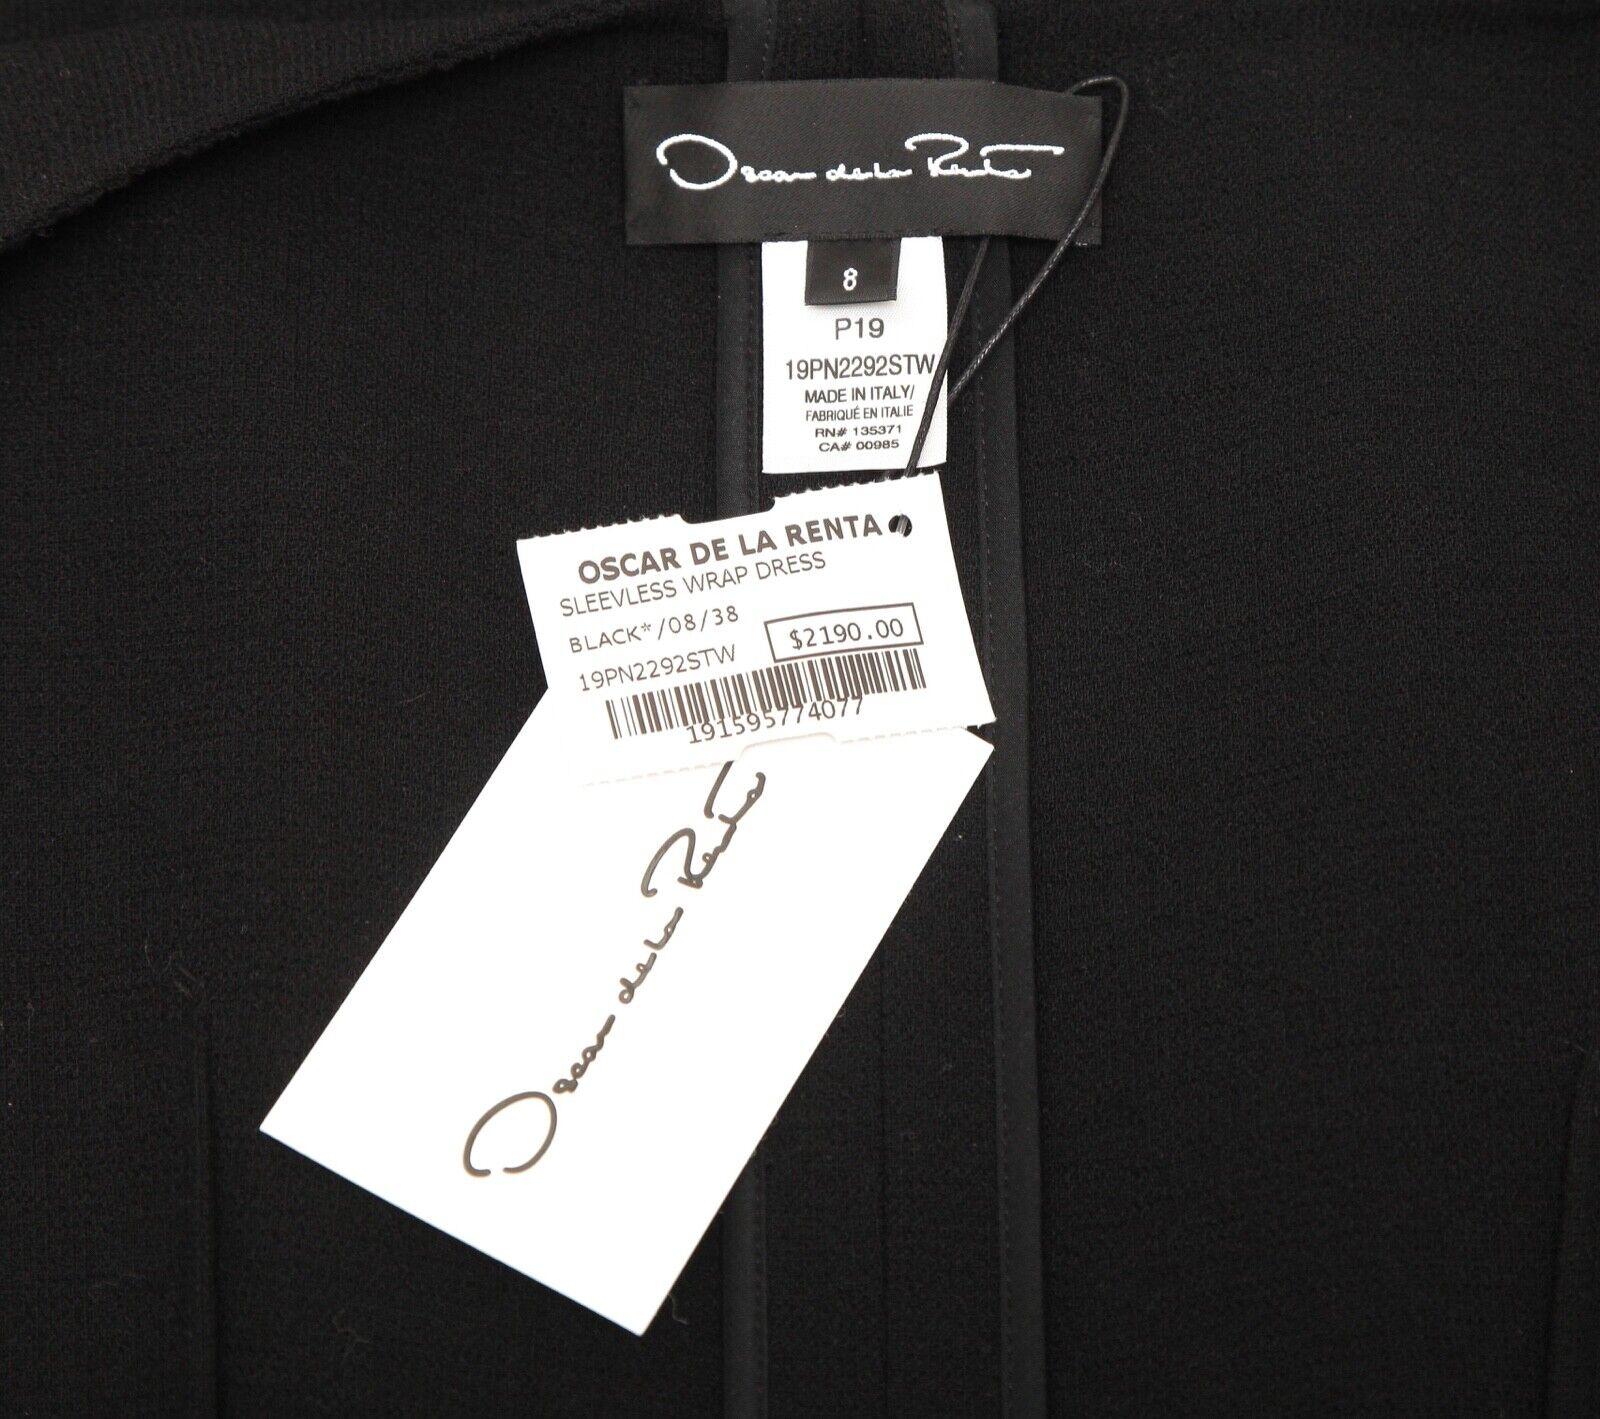 OSCAR DE LA RENTA Kleid Schwarz ärmellos Wrap Knit Sz 8 NWT $2190 im Angebot 4